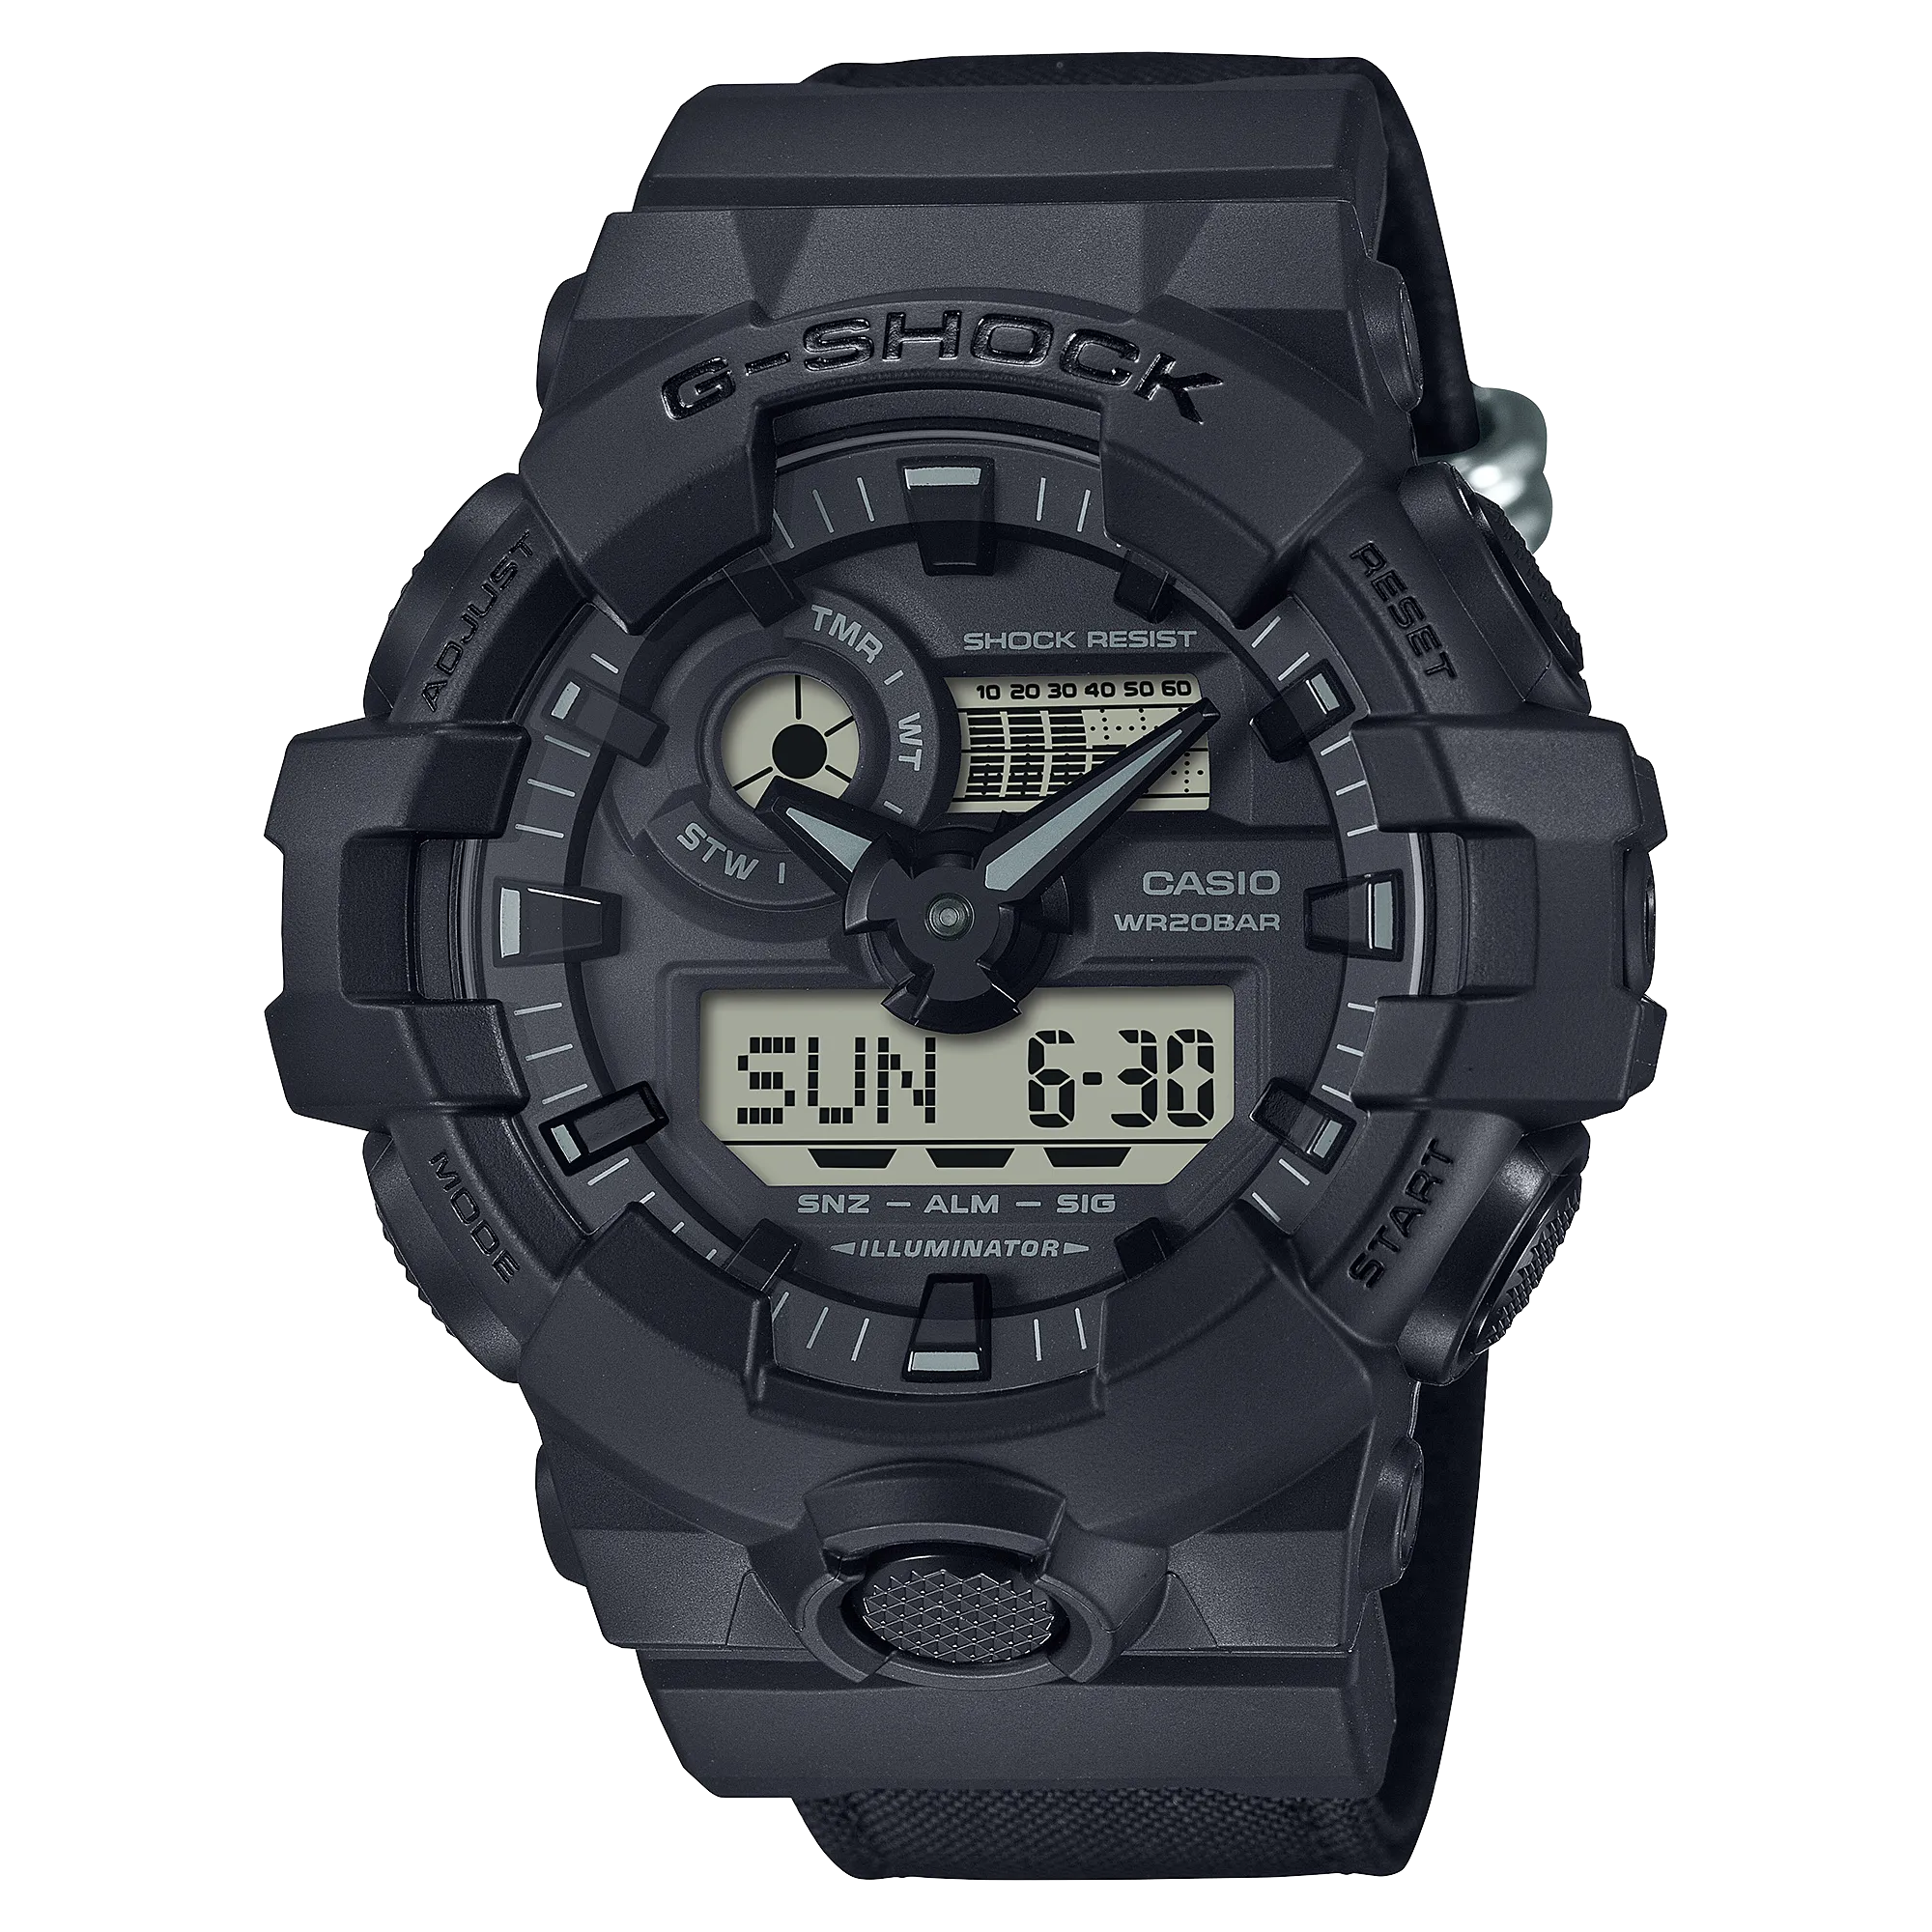 Casio G-Shock GA-700BCE-1ADR Analog Digital Quartz Men's Watch